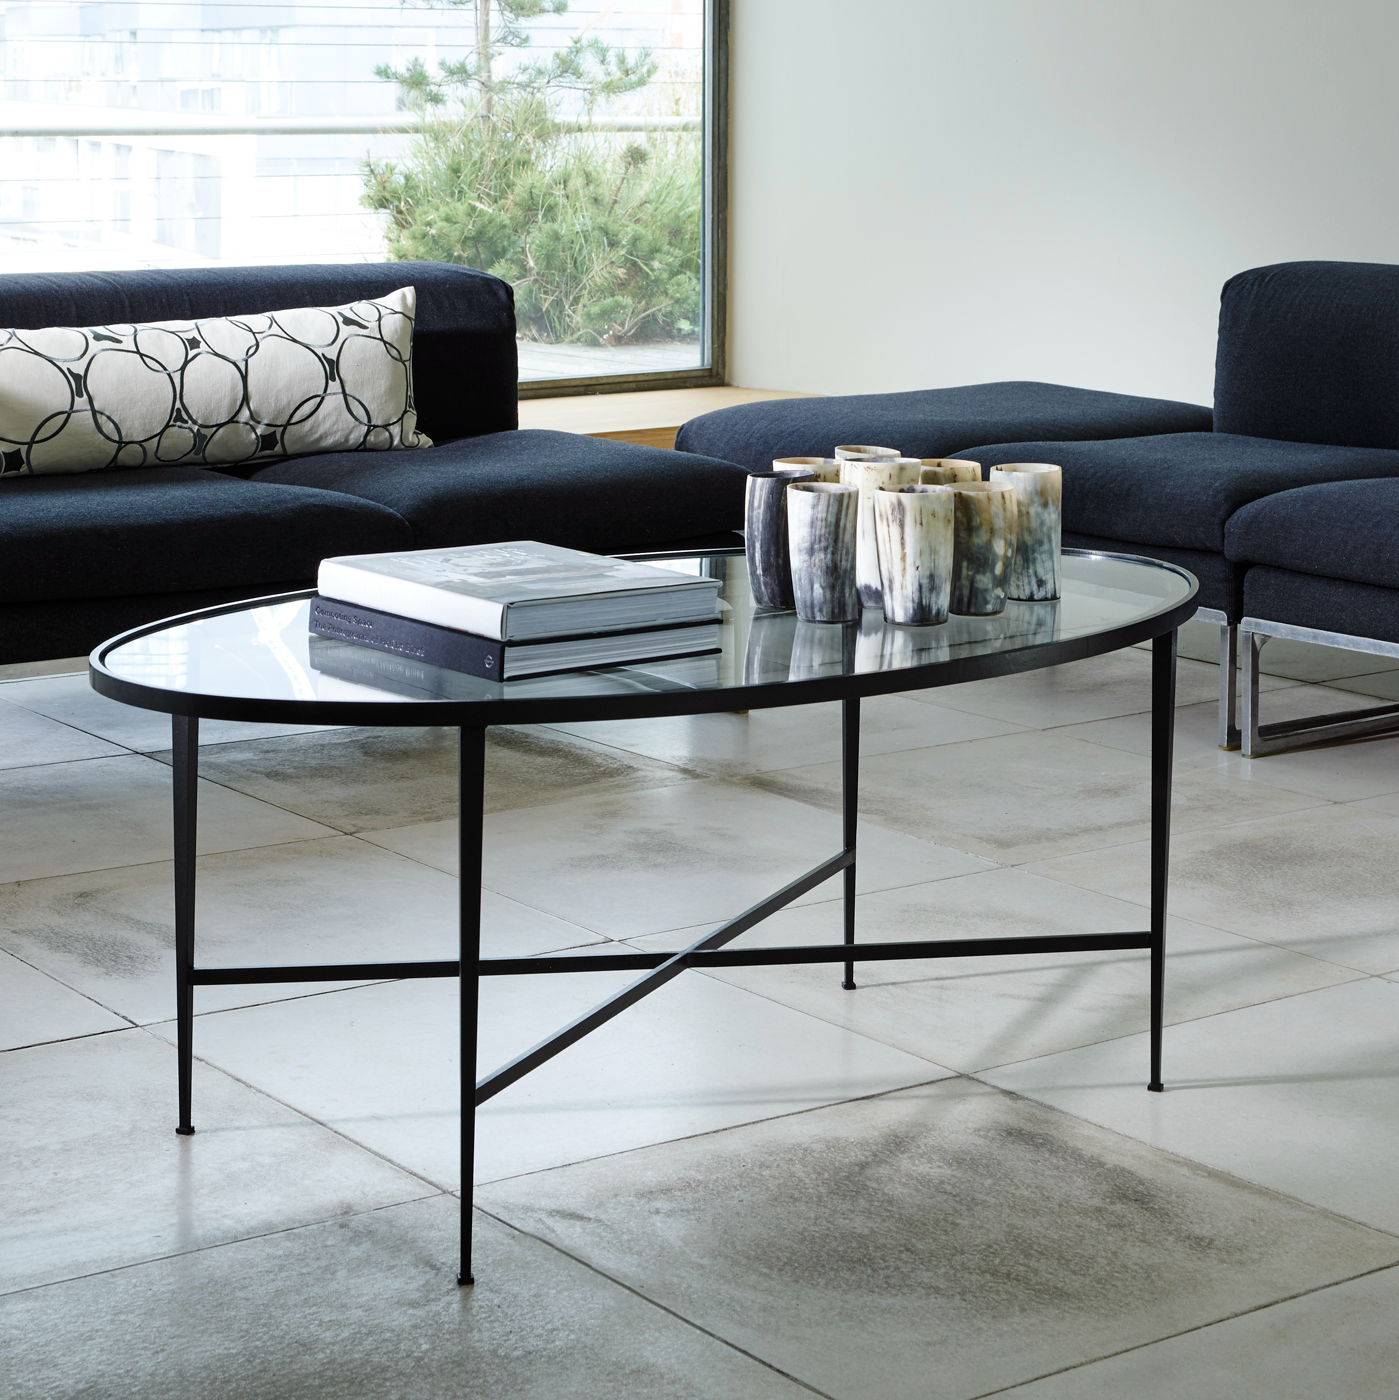 Ovalt soffbord, brons med glasskiva - by Vaughan Designs - hos Alegni.com